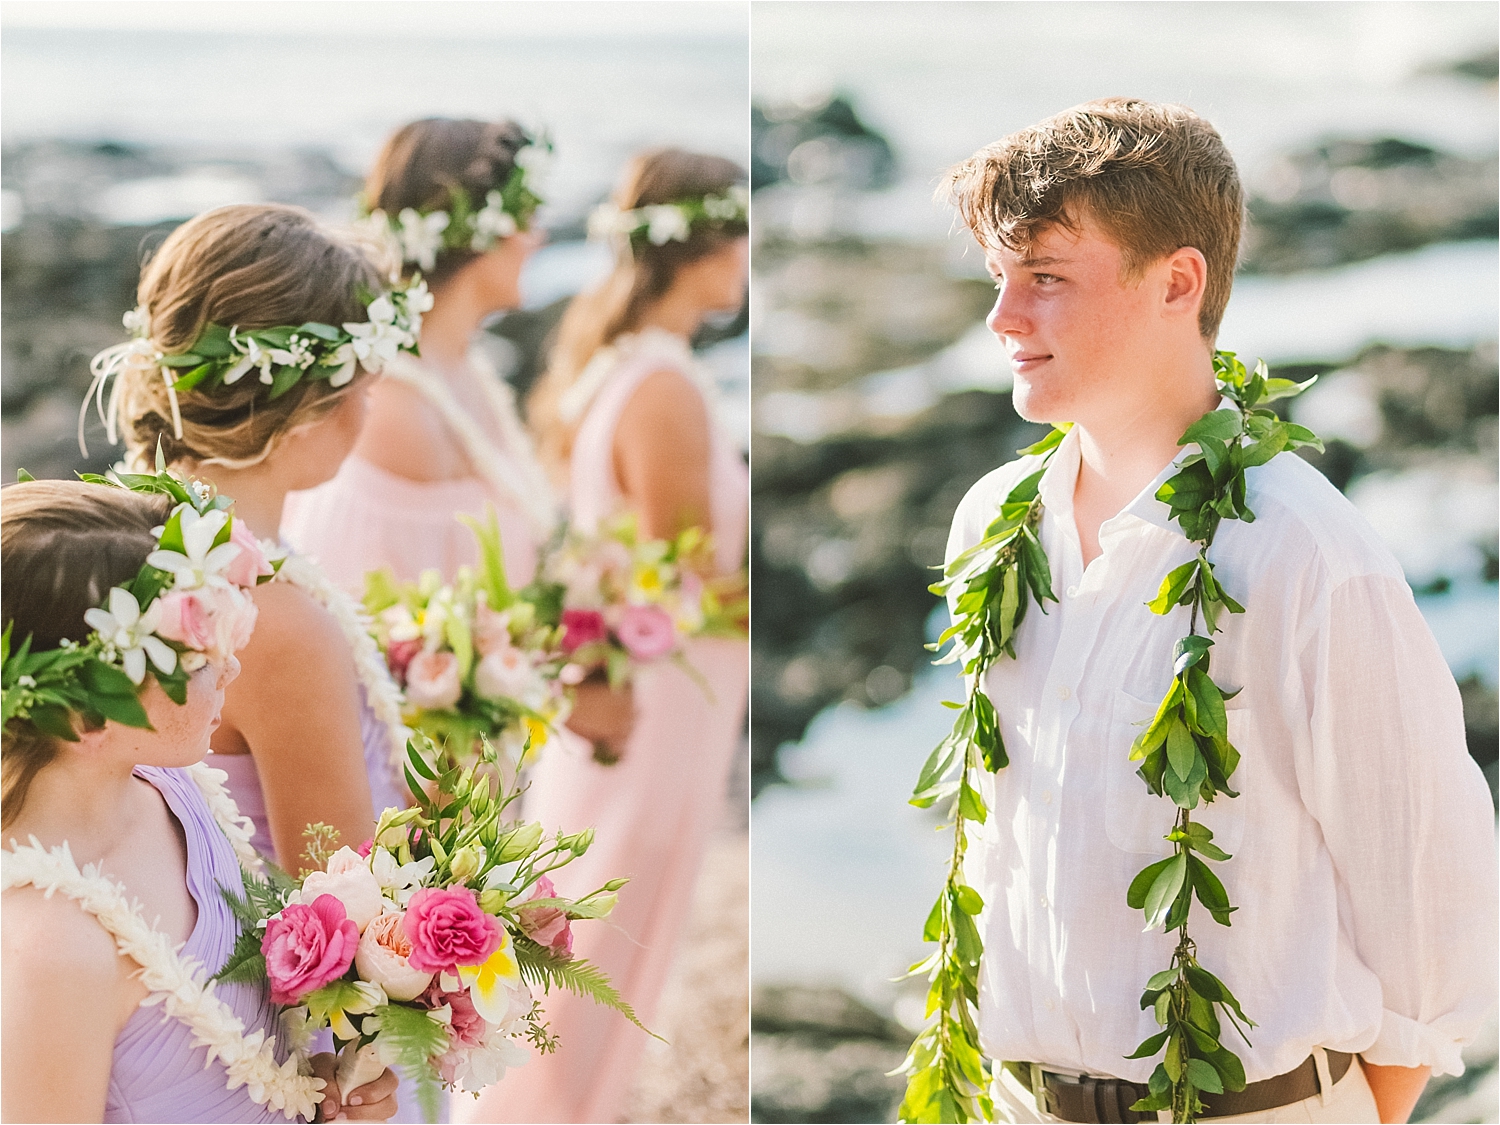  Maui beach wedding 